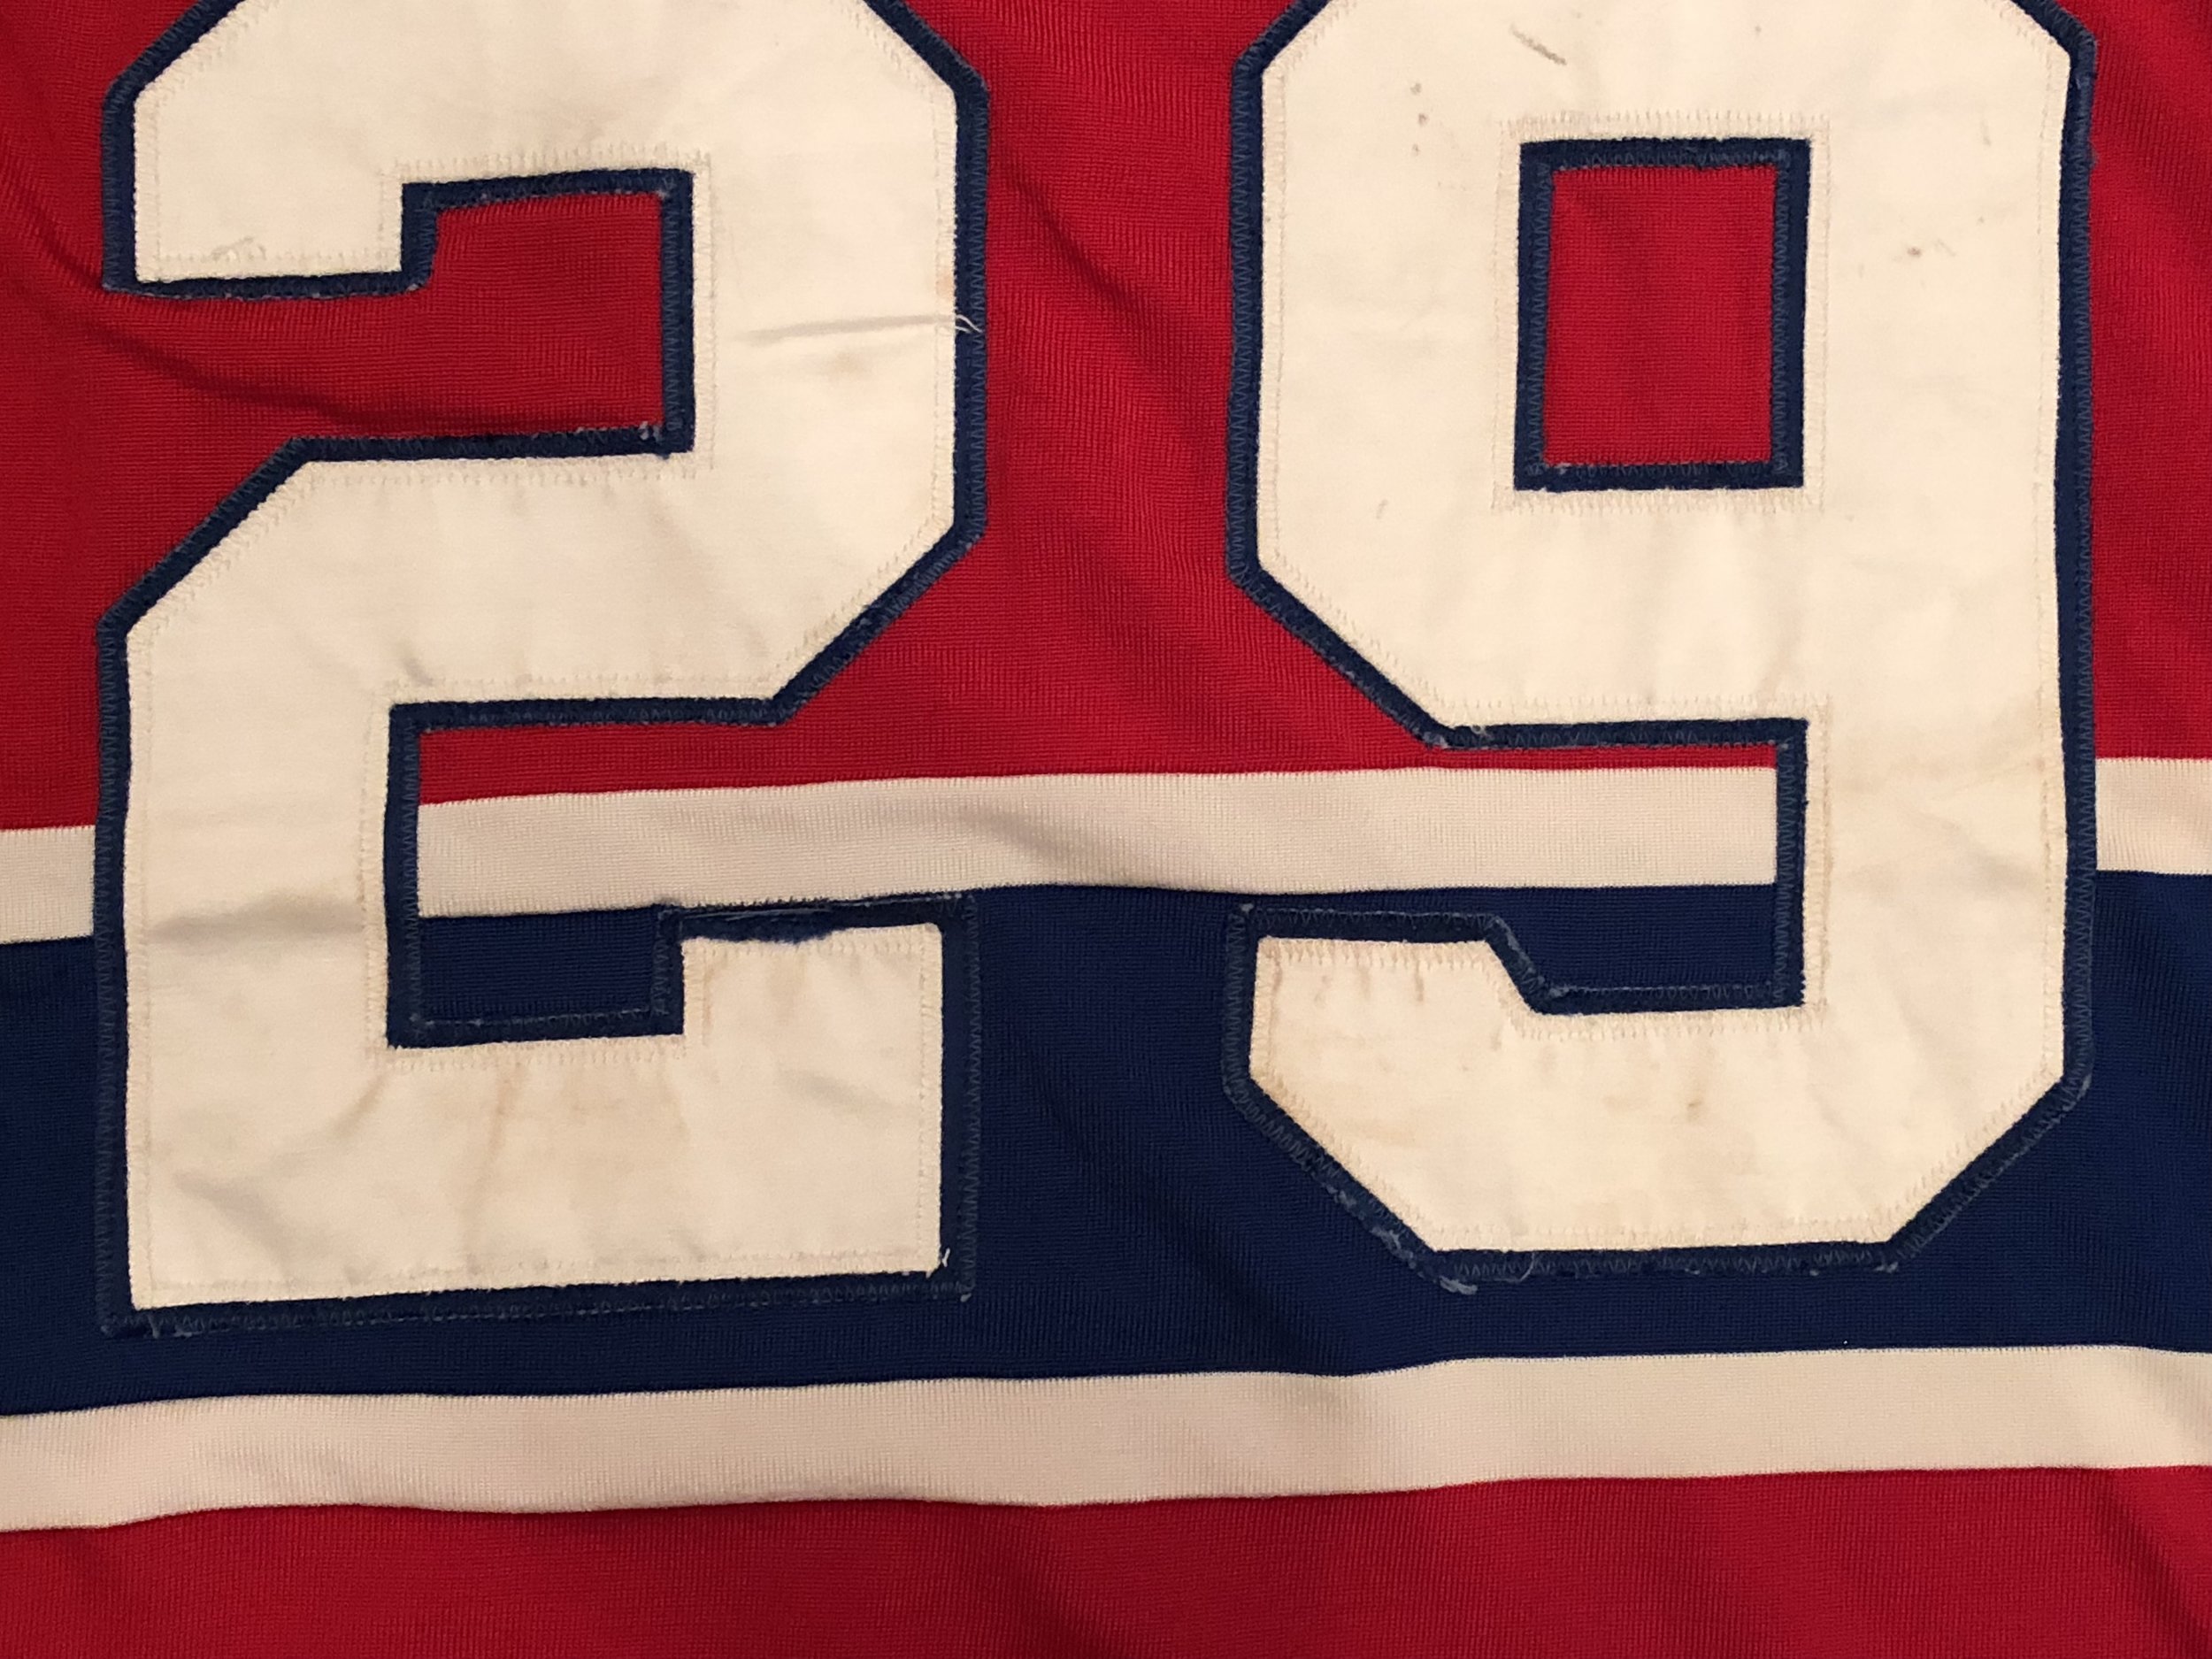 KEN DRYDEN - Montreal Canadiens Jersey – Stringer Sports Memorabilia